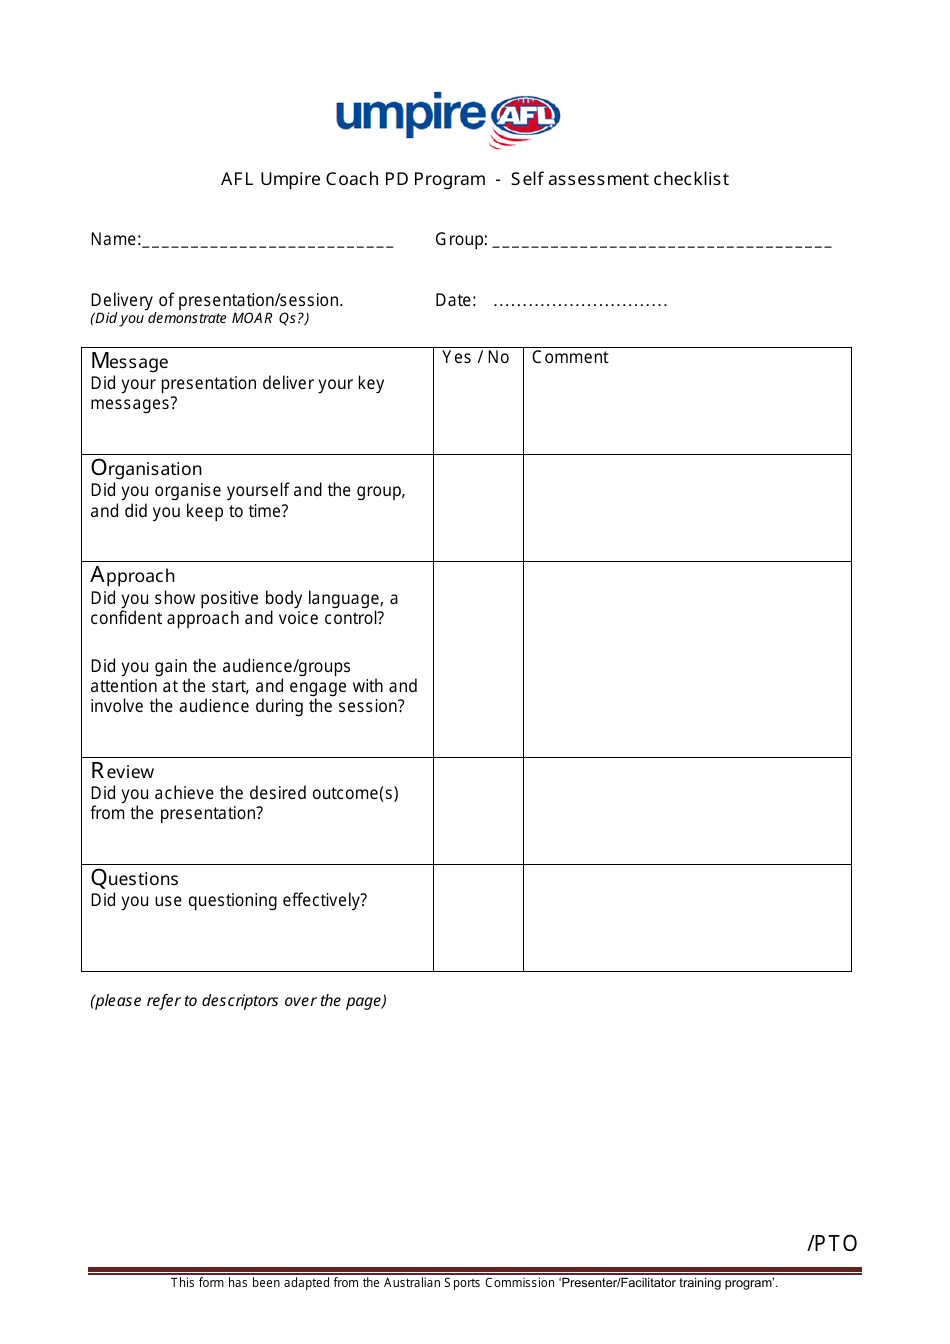 Self Assessment Checklist Template Umpire Afl Download Printable PDF